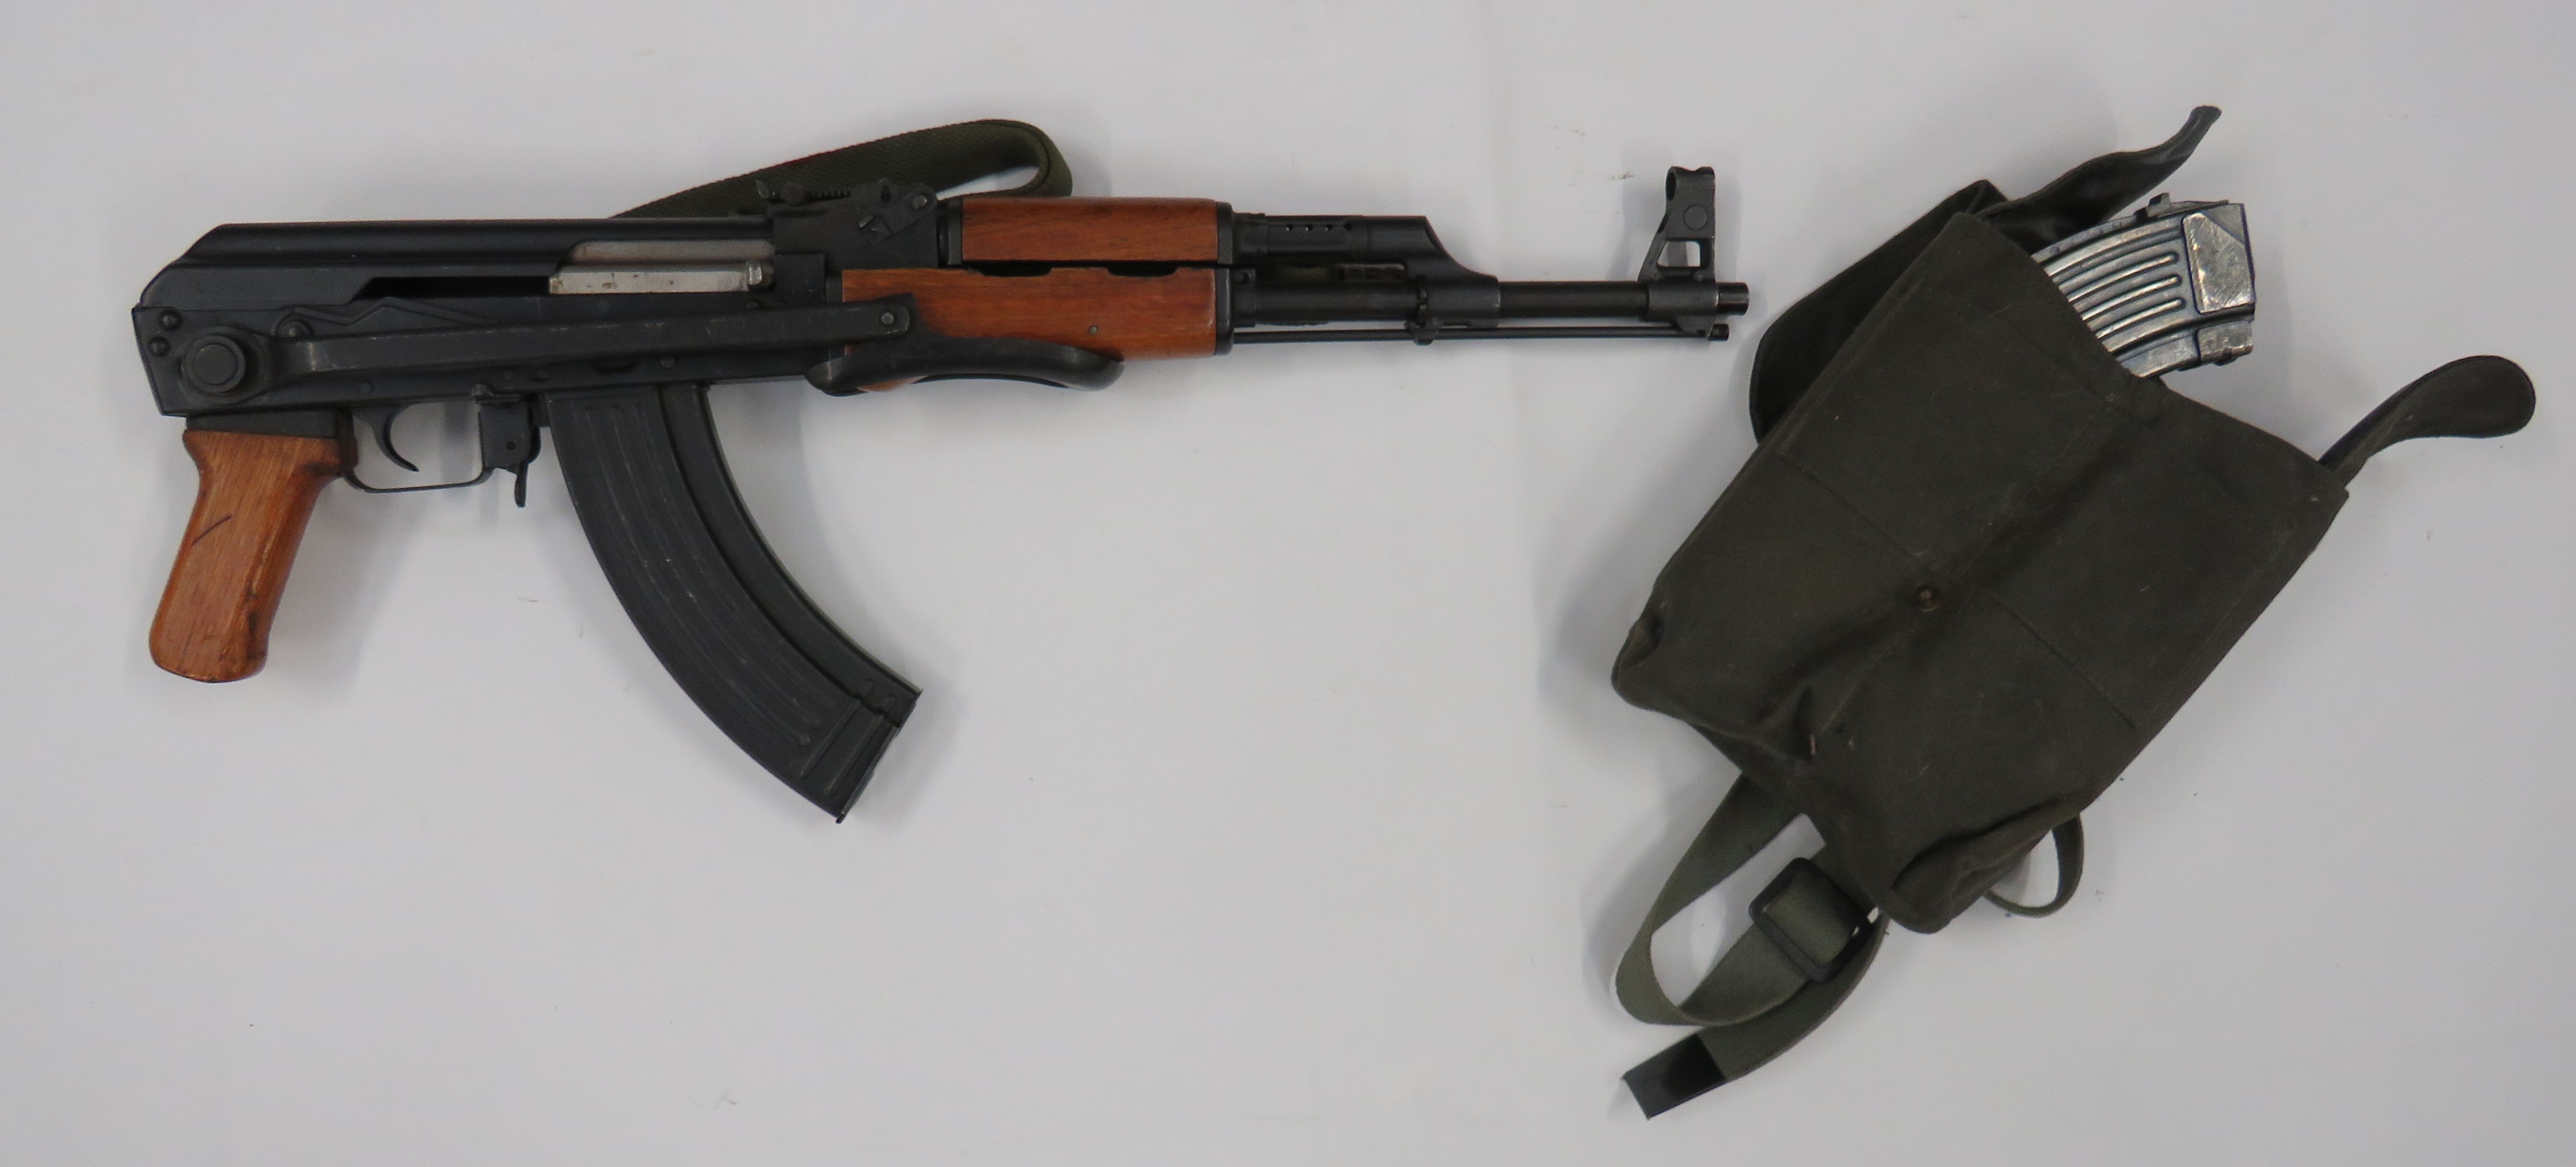 Deactivated Kalashnikov AK47 Assault Carbine 7.62 mm, 15 1/2 inch, blackened barrel with front